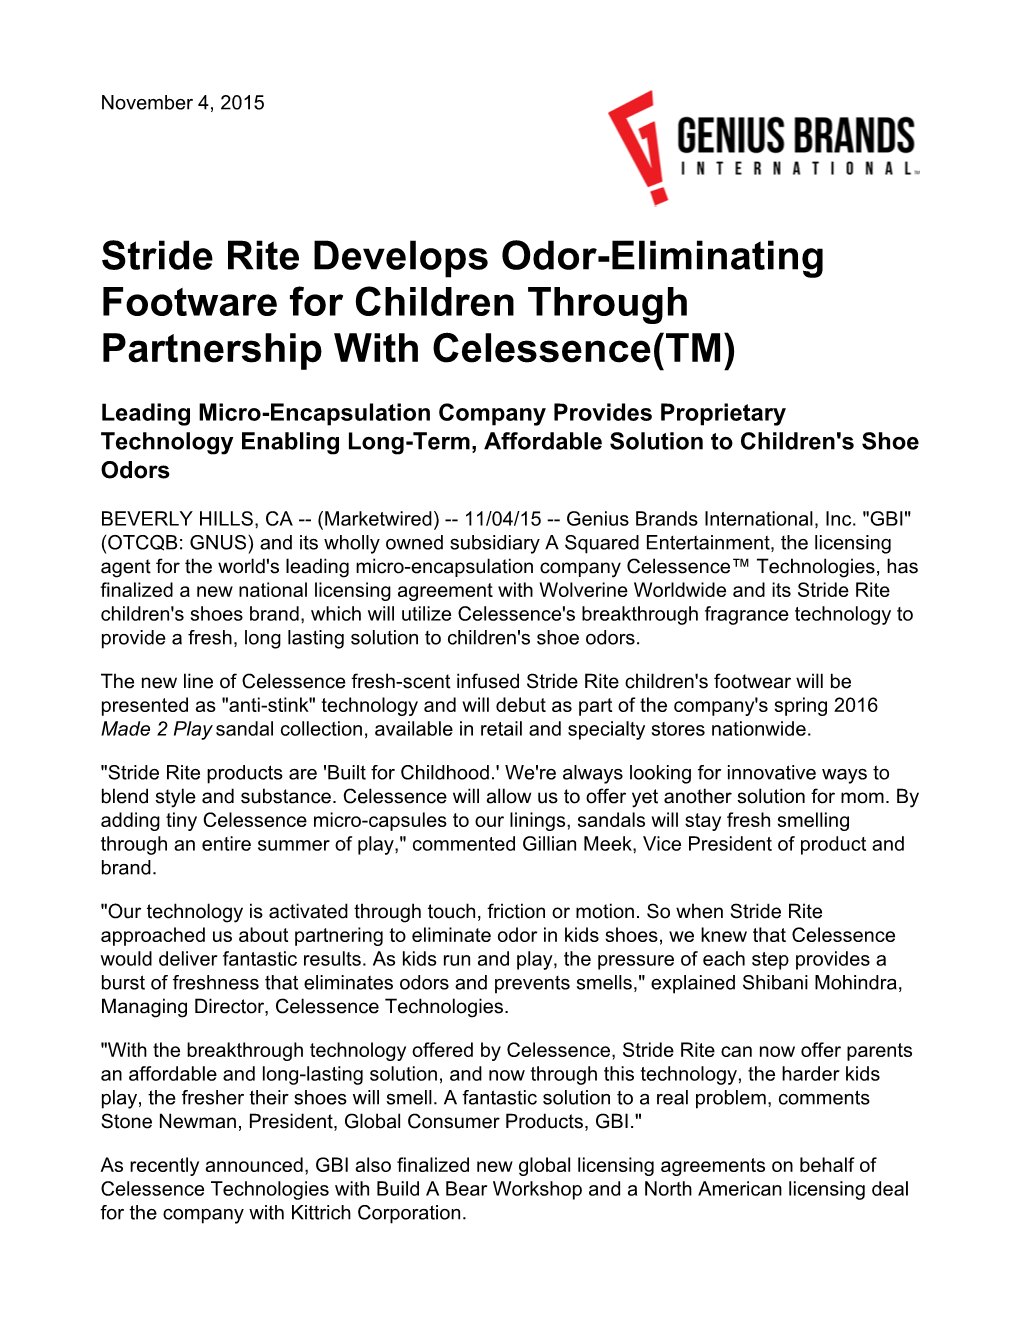 Stride Rite Develops Odor-Eliminating Footware for Children Through Partnership with Celessence(TM)